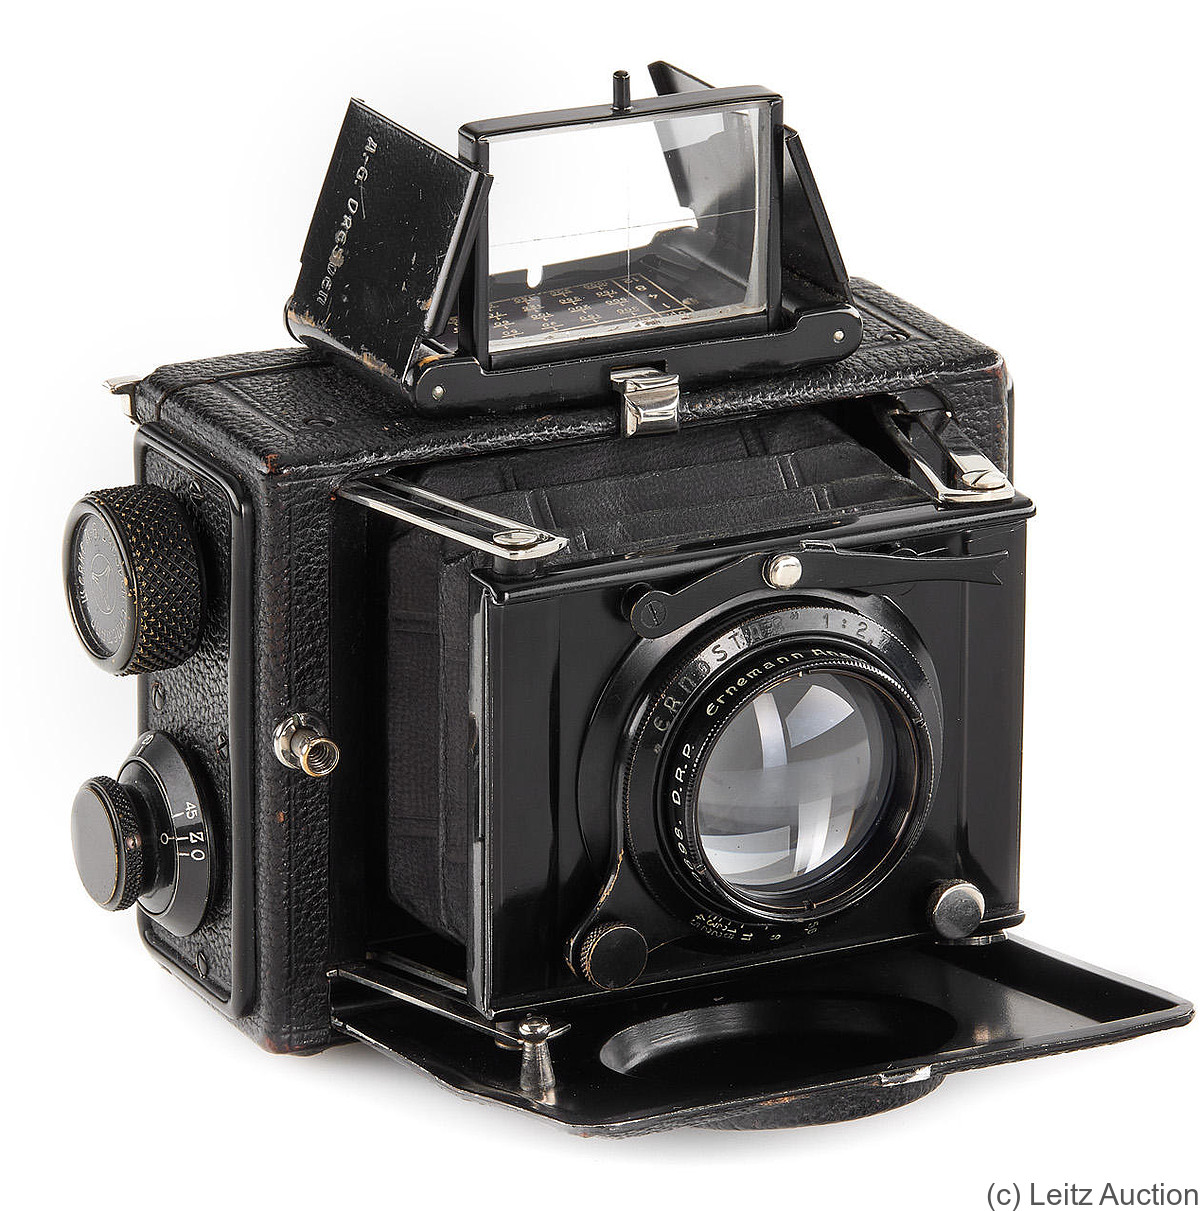 Ernemann: Miniature Klapp camera